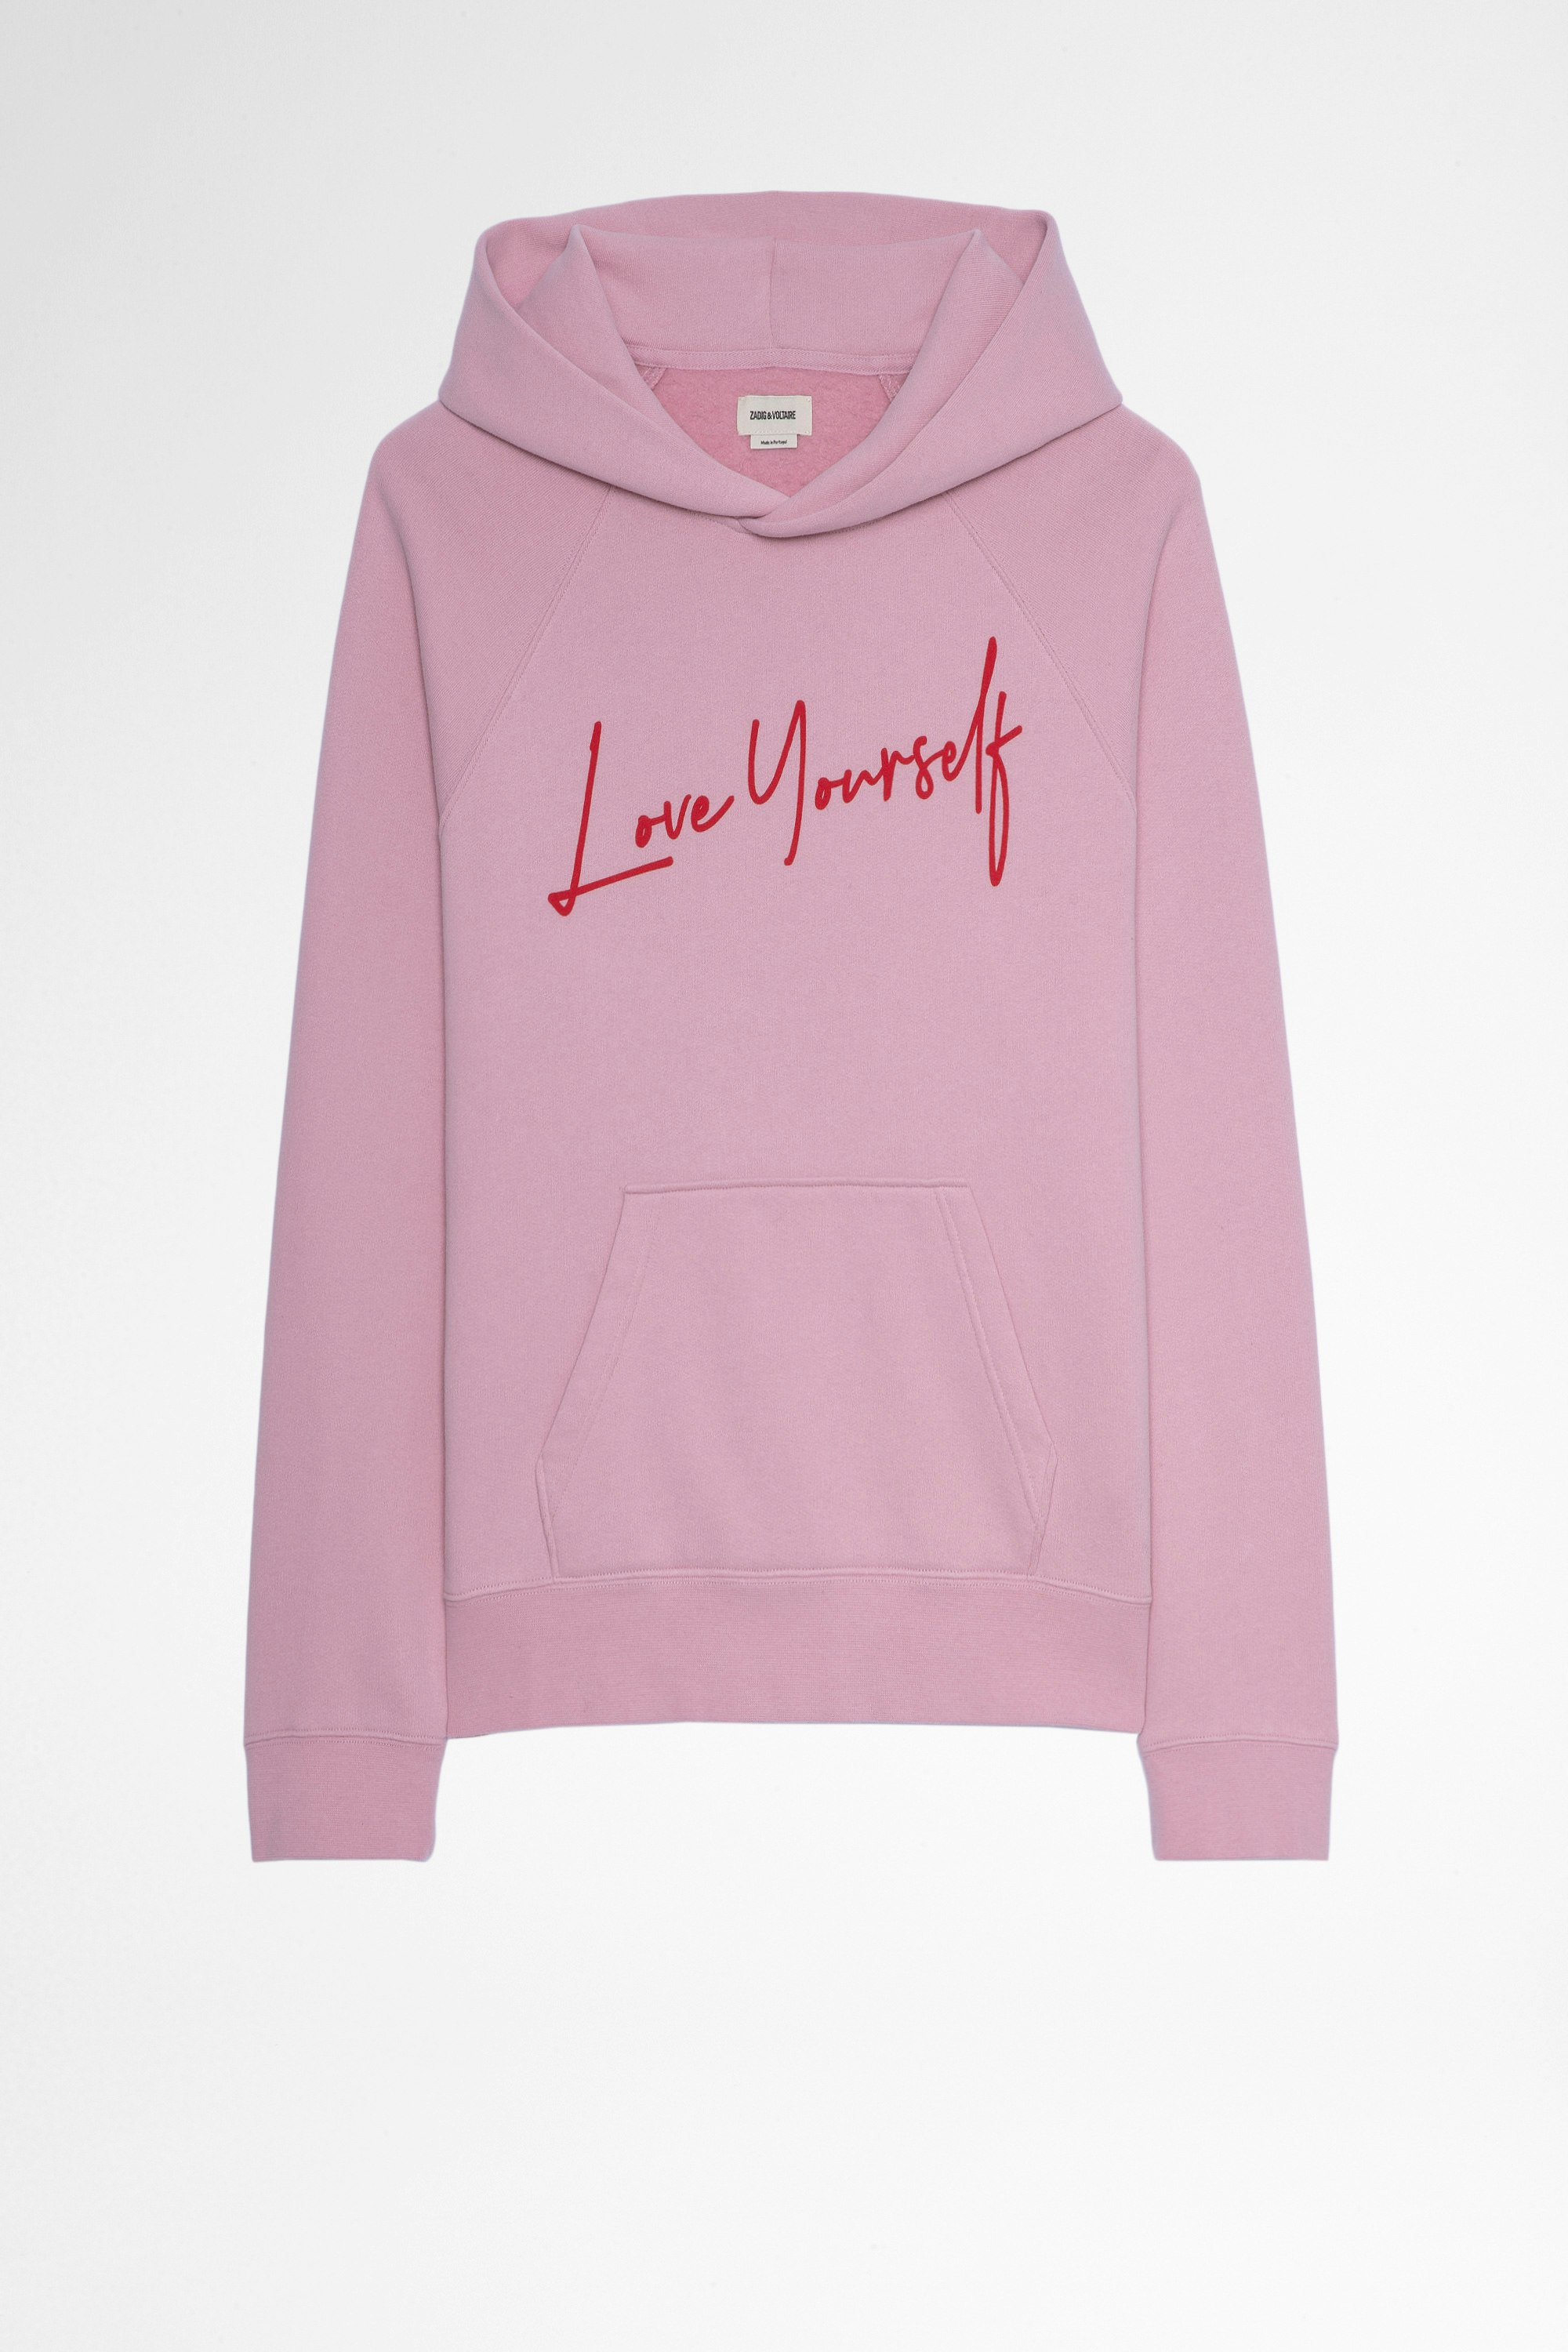 Georgy Photoprint Love スウェット Women's pink love yourself hoodie